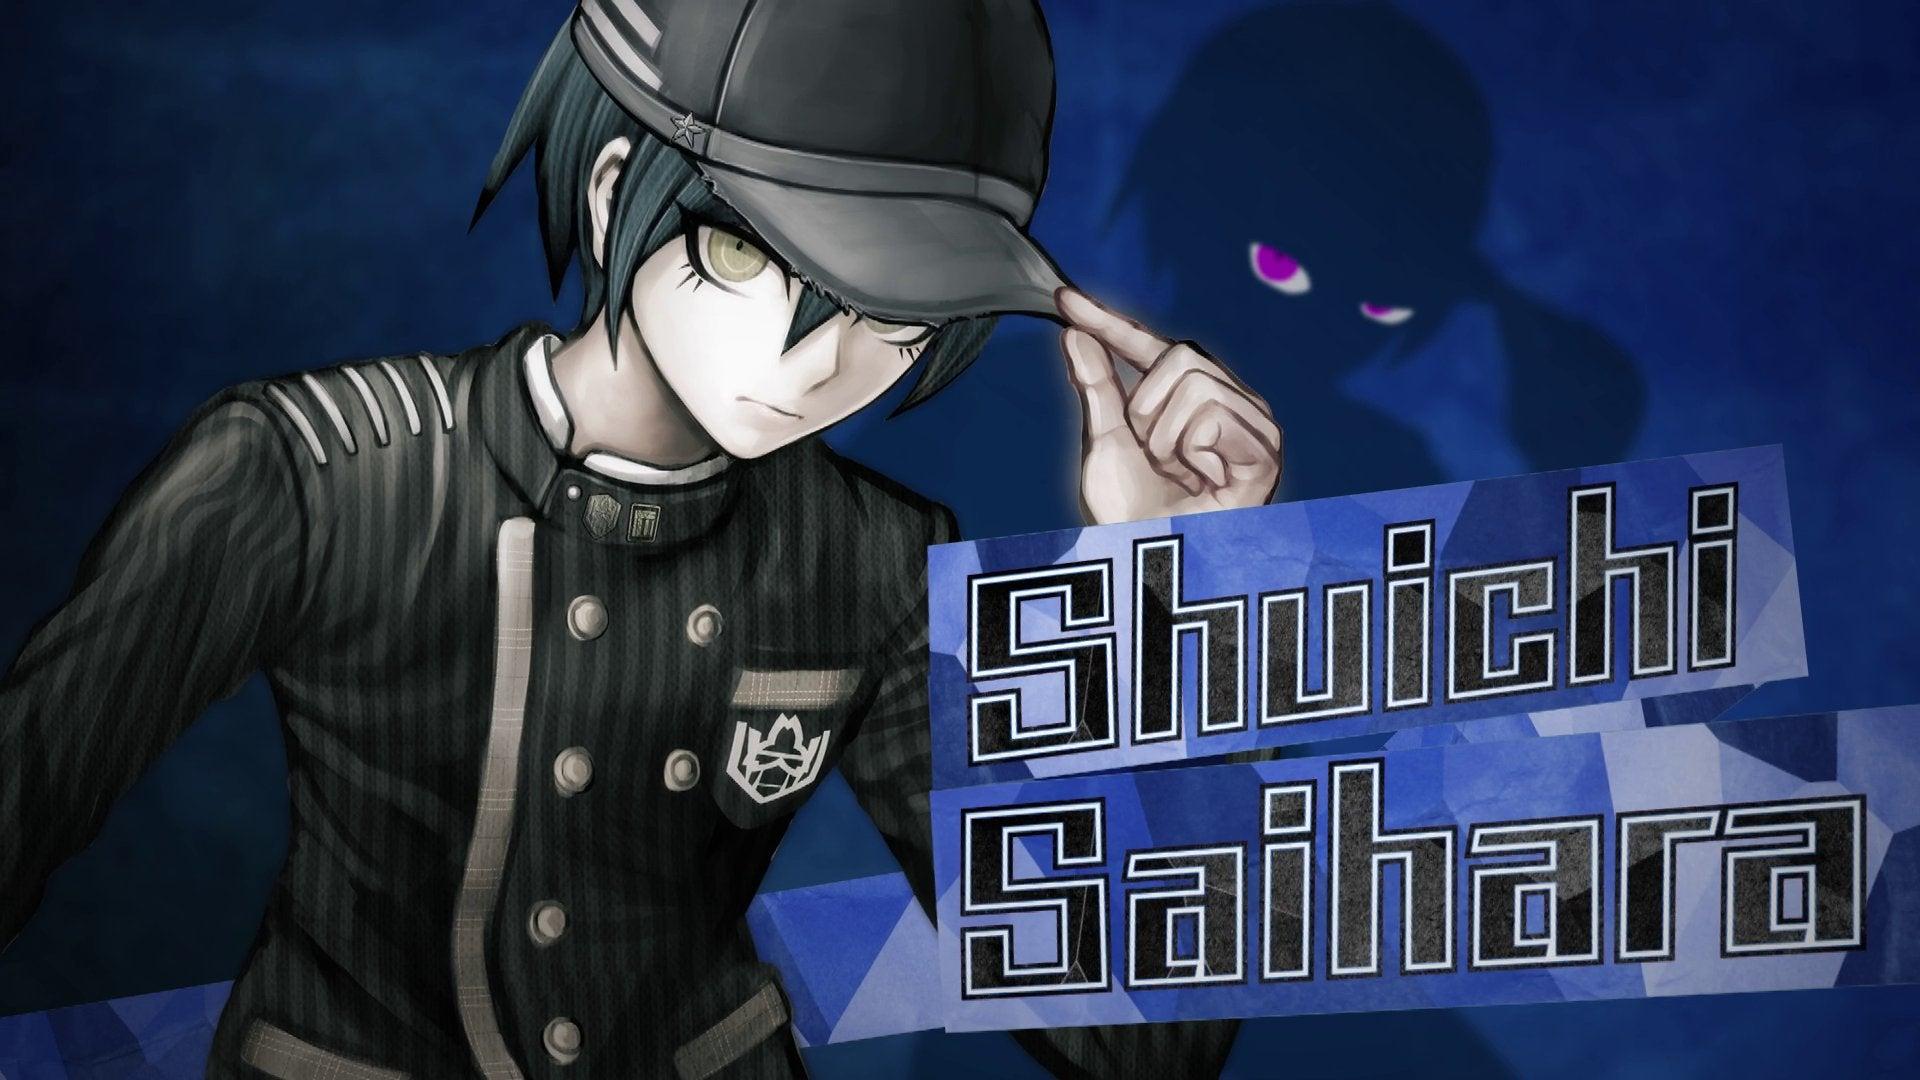 Shuichi Saihara: The Determined yet Fragile Detective